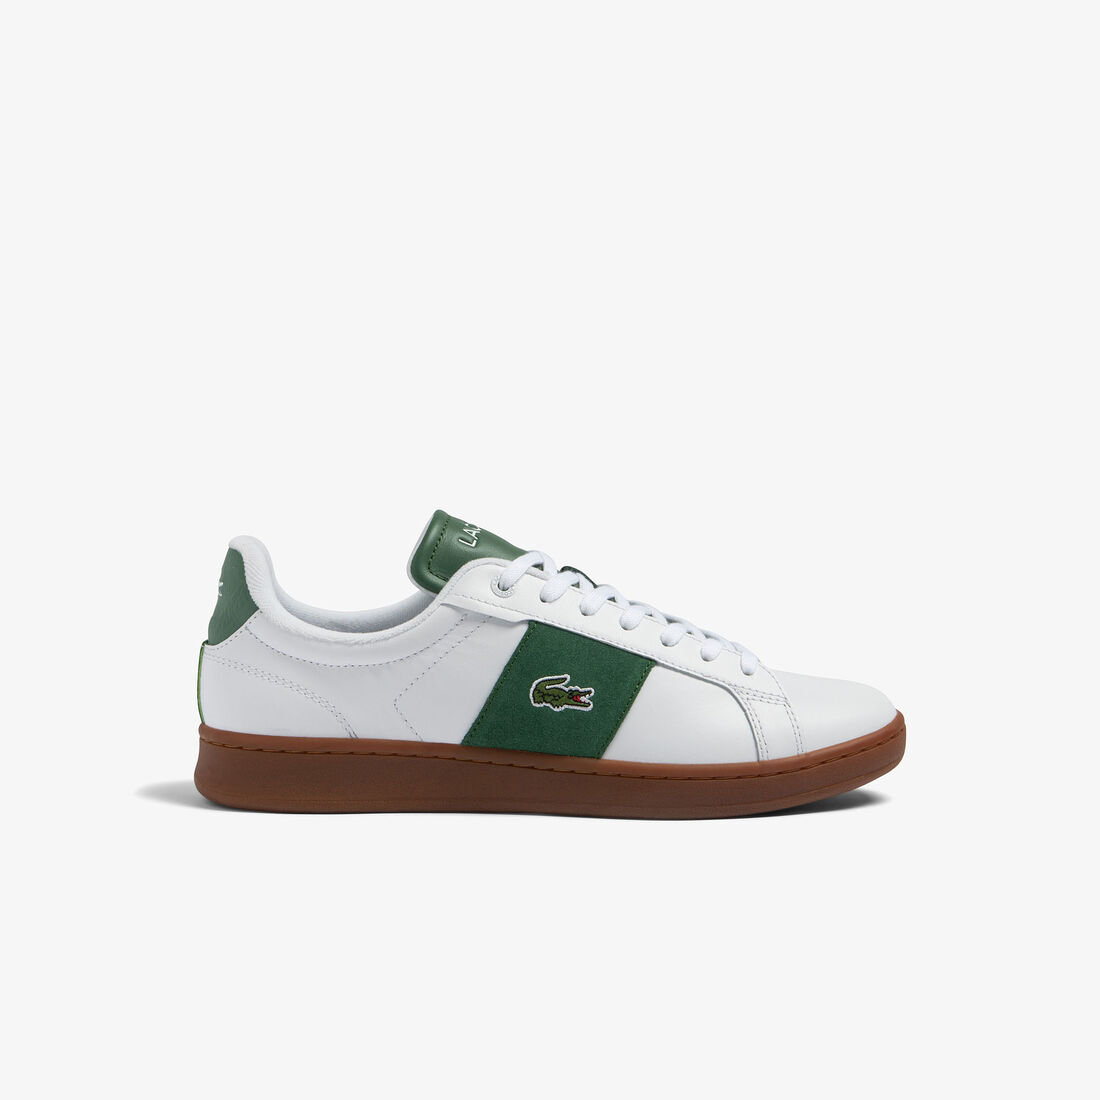 Lacoste Carnaby Pro Leder Colour Pop Sneakers Herren Weiß | YQLD-71829